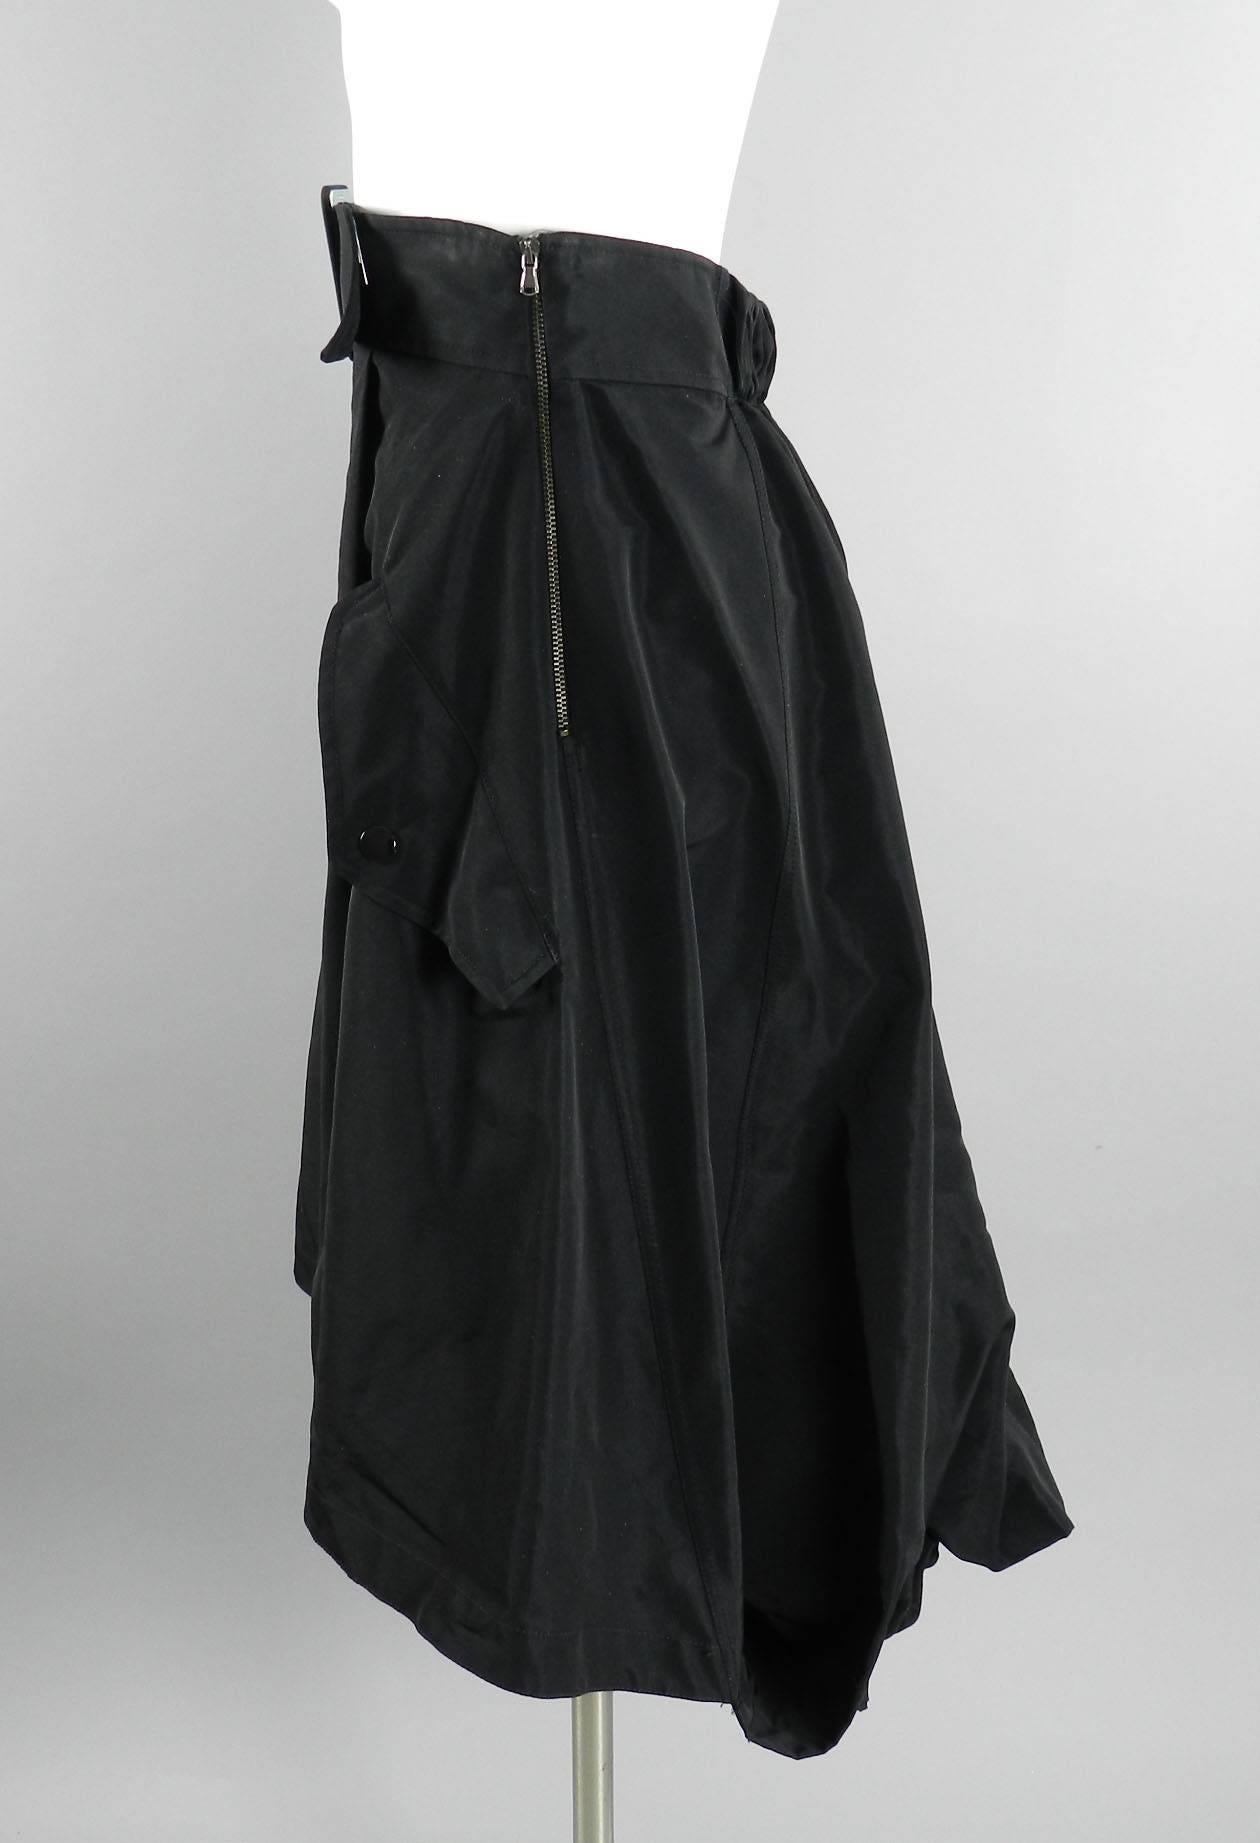 Women's Gaultier Femme Black Skirt